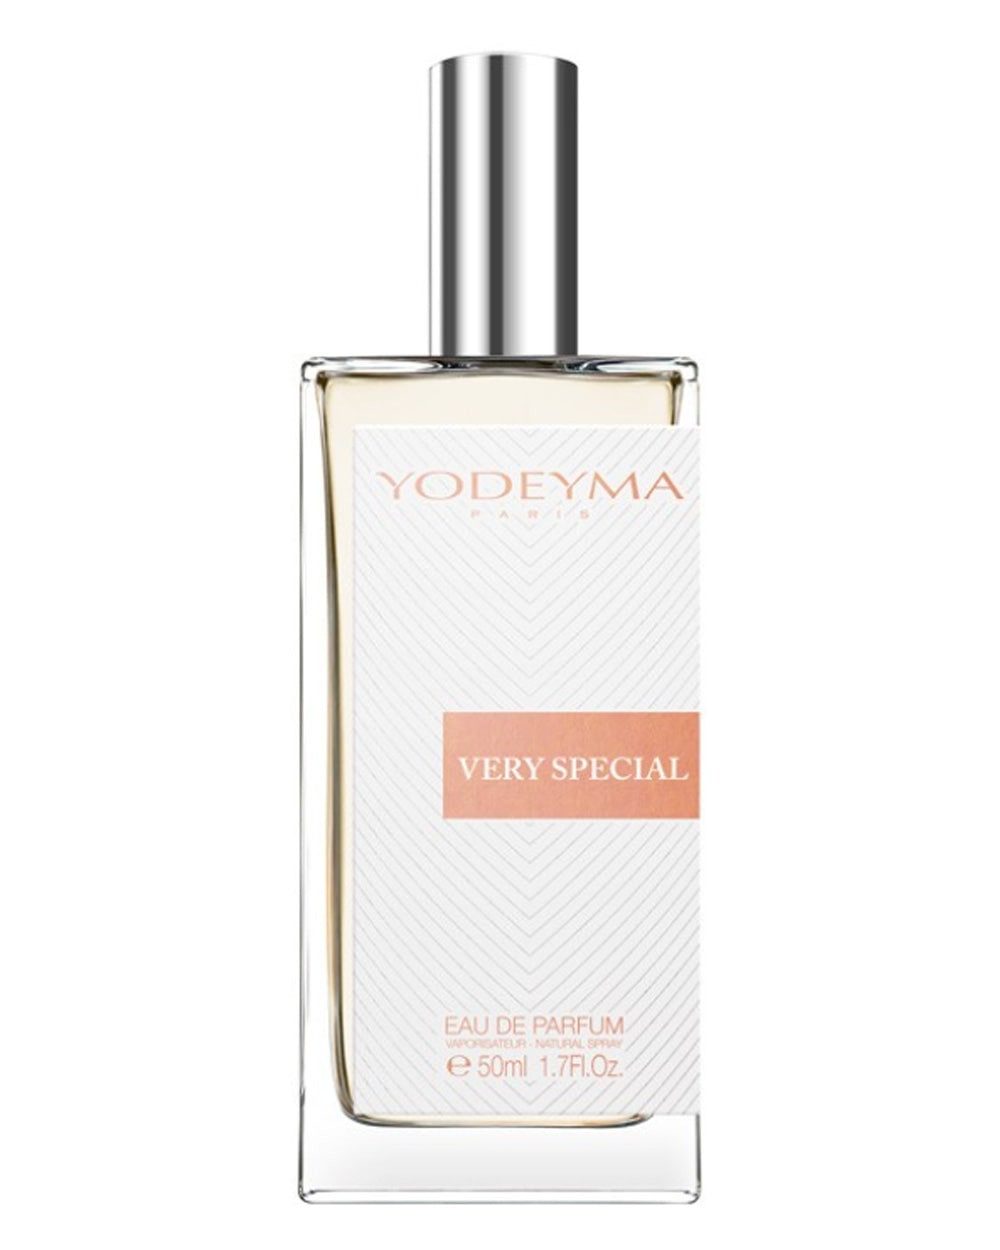 Eau de Parfum YODEYMA Parfum Very Special - Eau de Parfum für Damen 50 ml